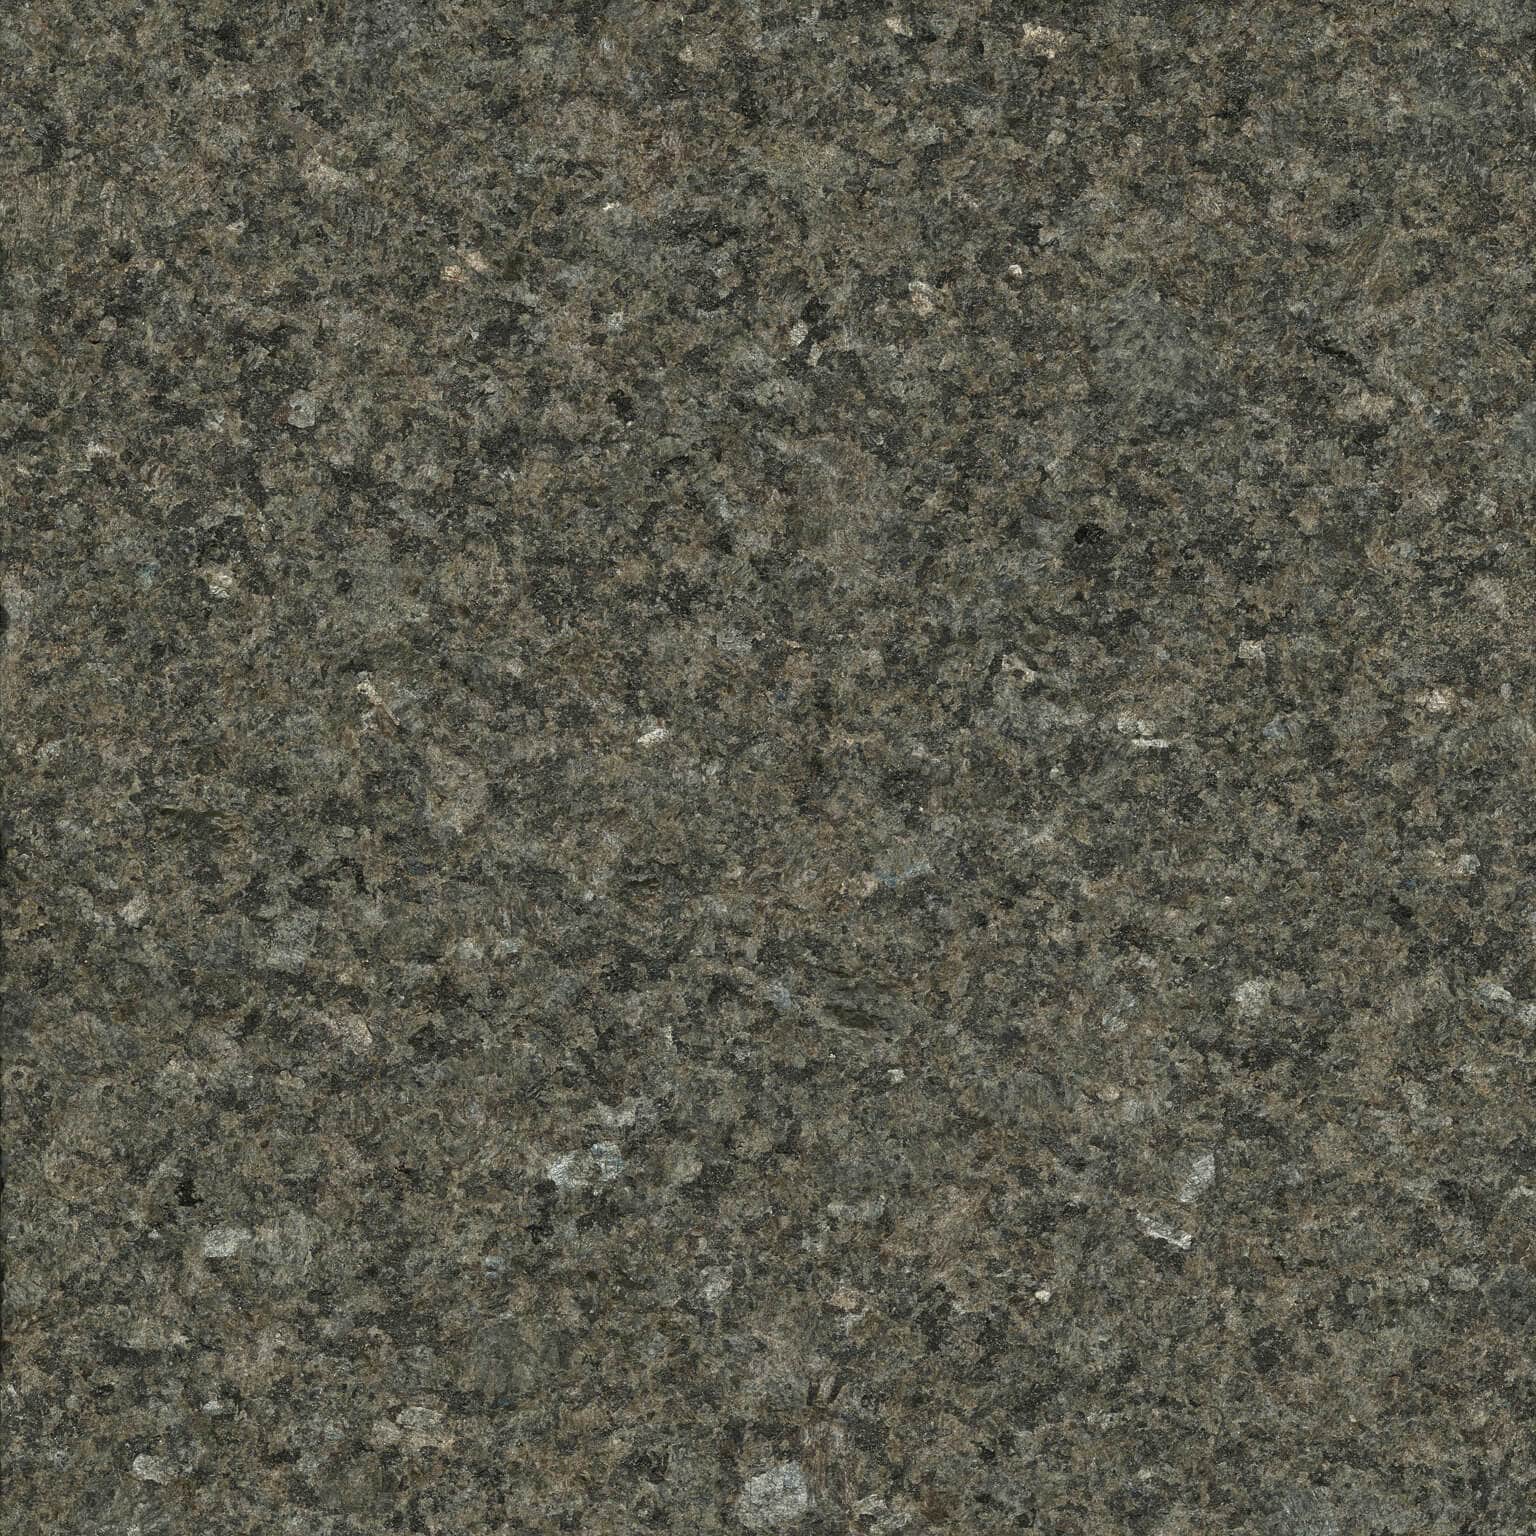 https://www.polycor.com/wp-content/uploads/2023/02/laurentian-green-flamed-granite-polycor-full.jpg